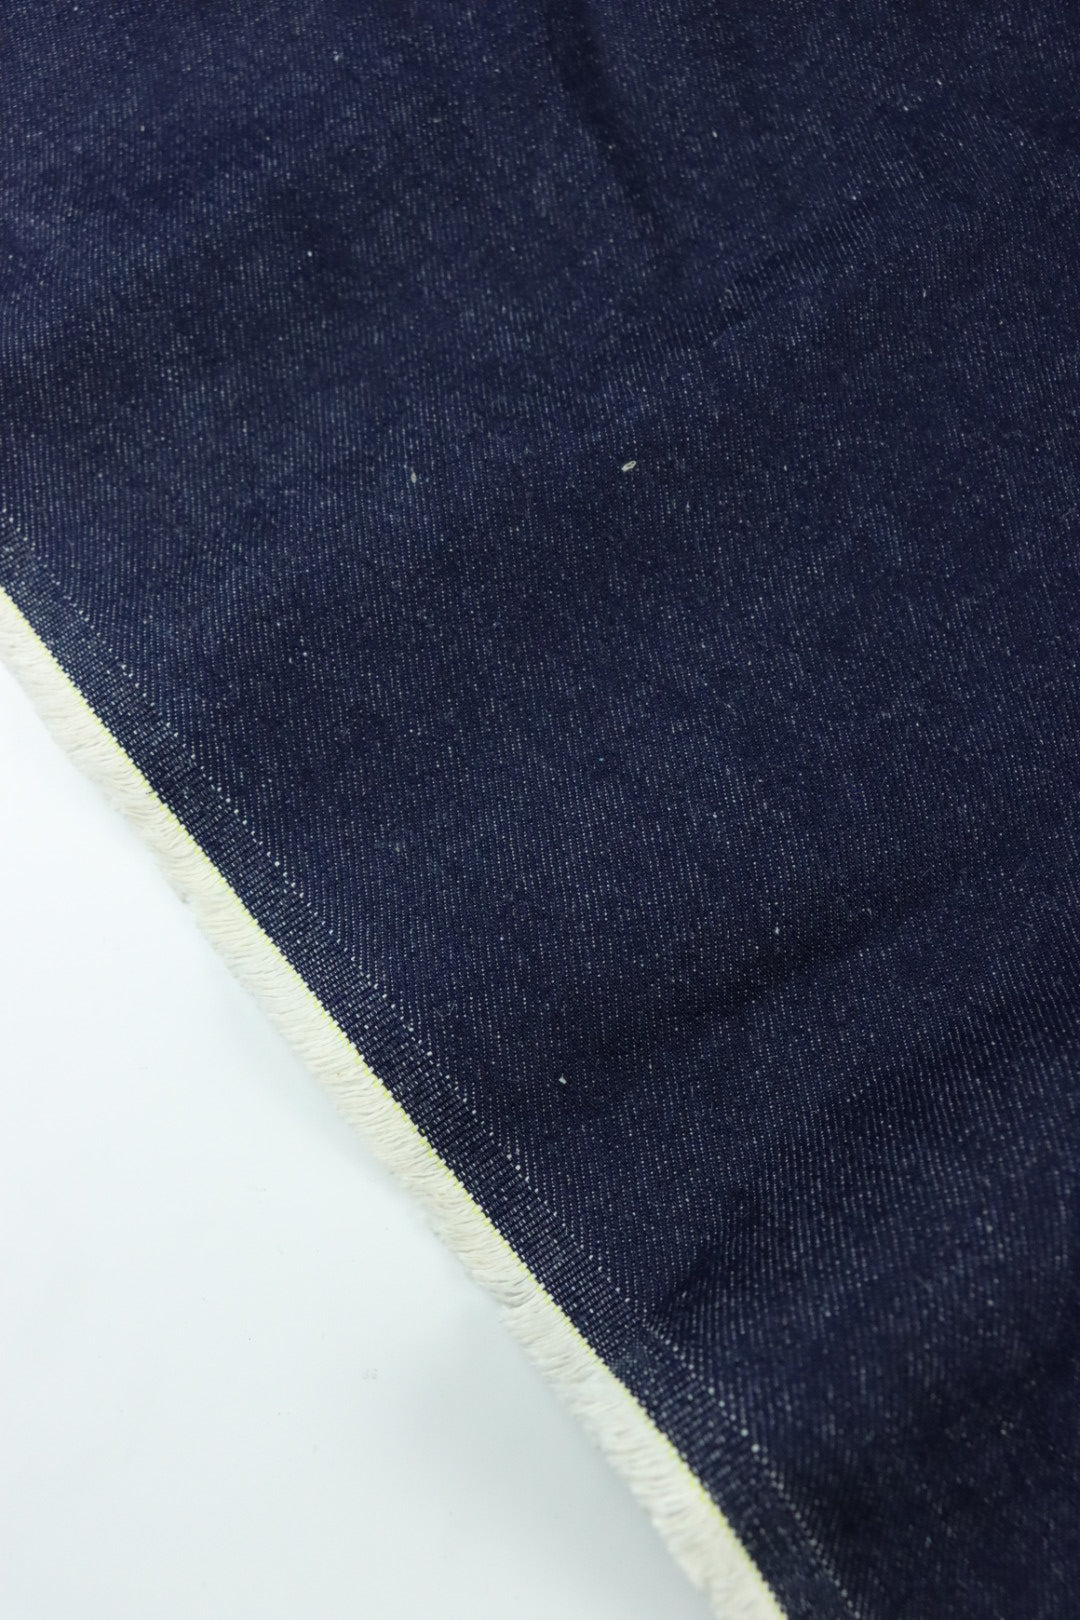 Deep indigo blue-black two tone, thick thread cotton fabric